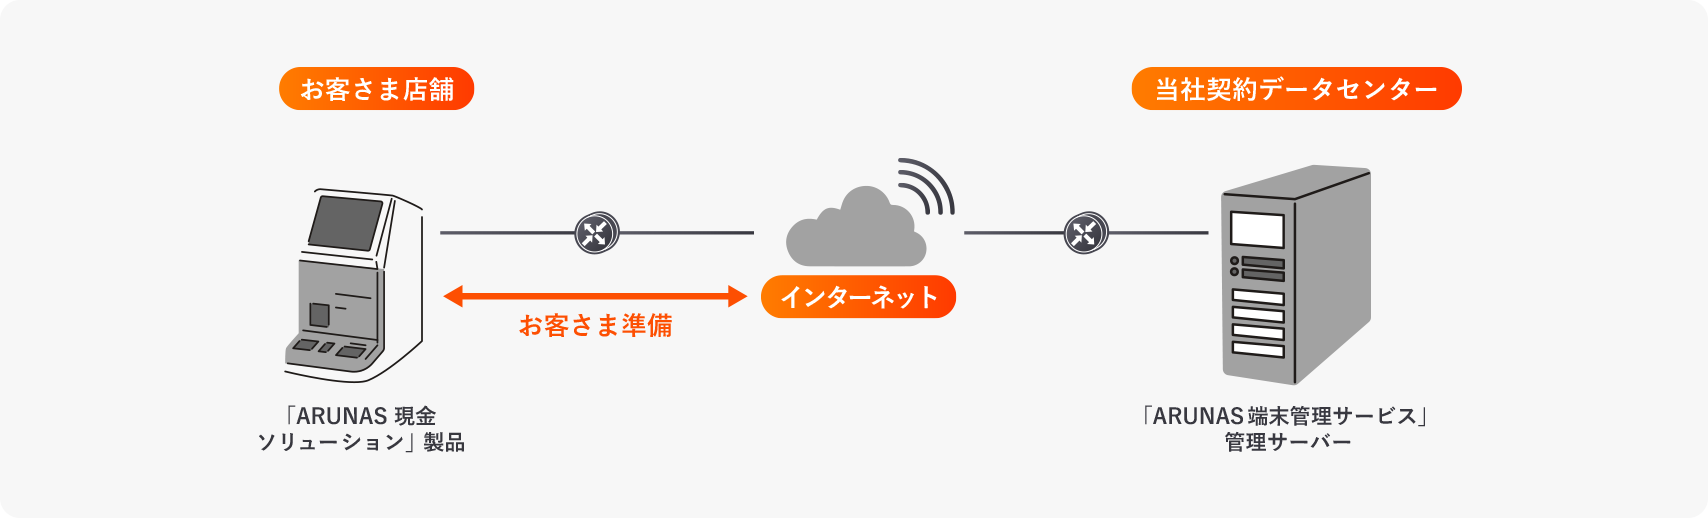 「ARUNAS 端末管理サービス」のインターネット接続構成例